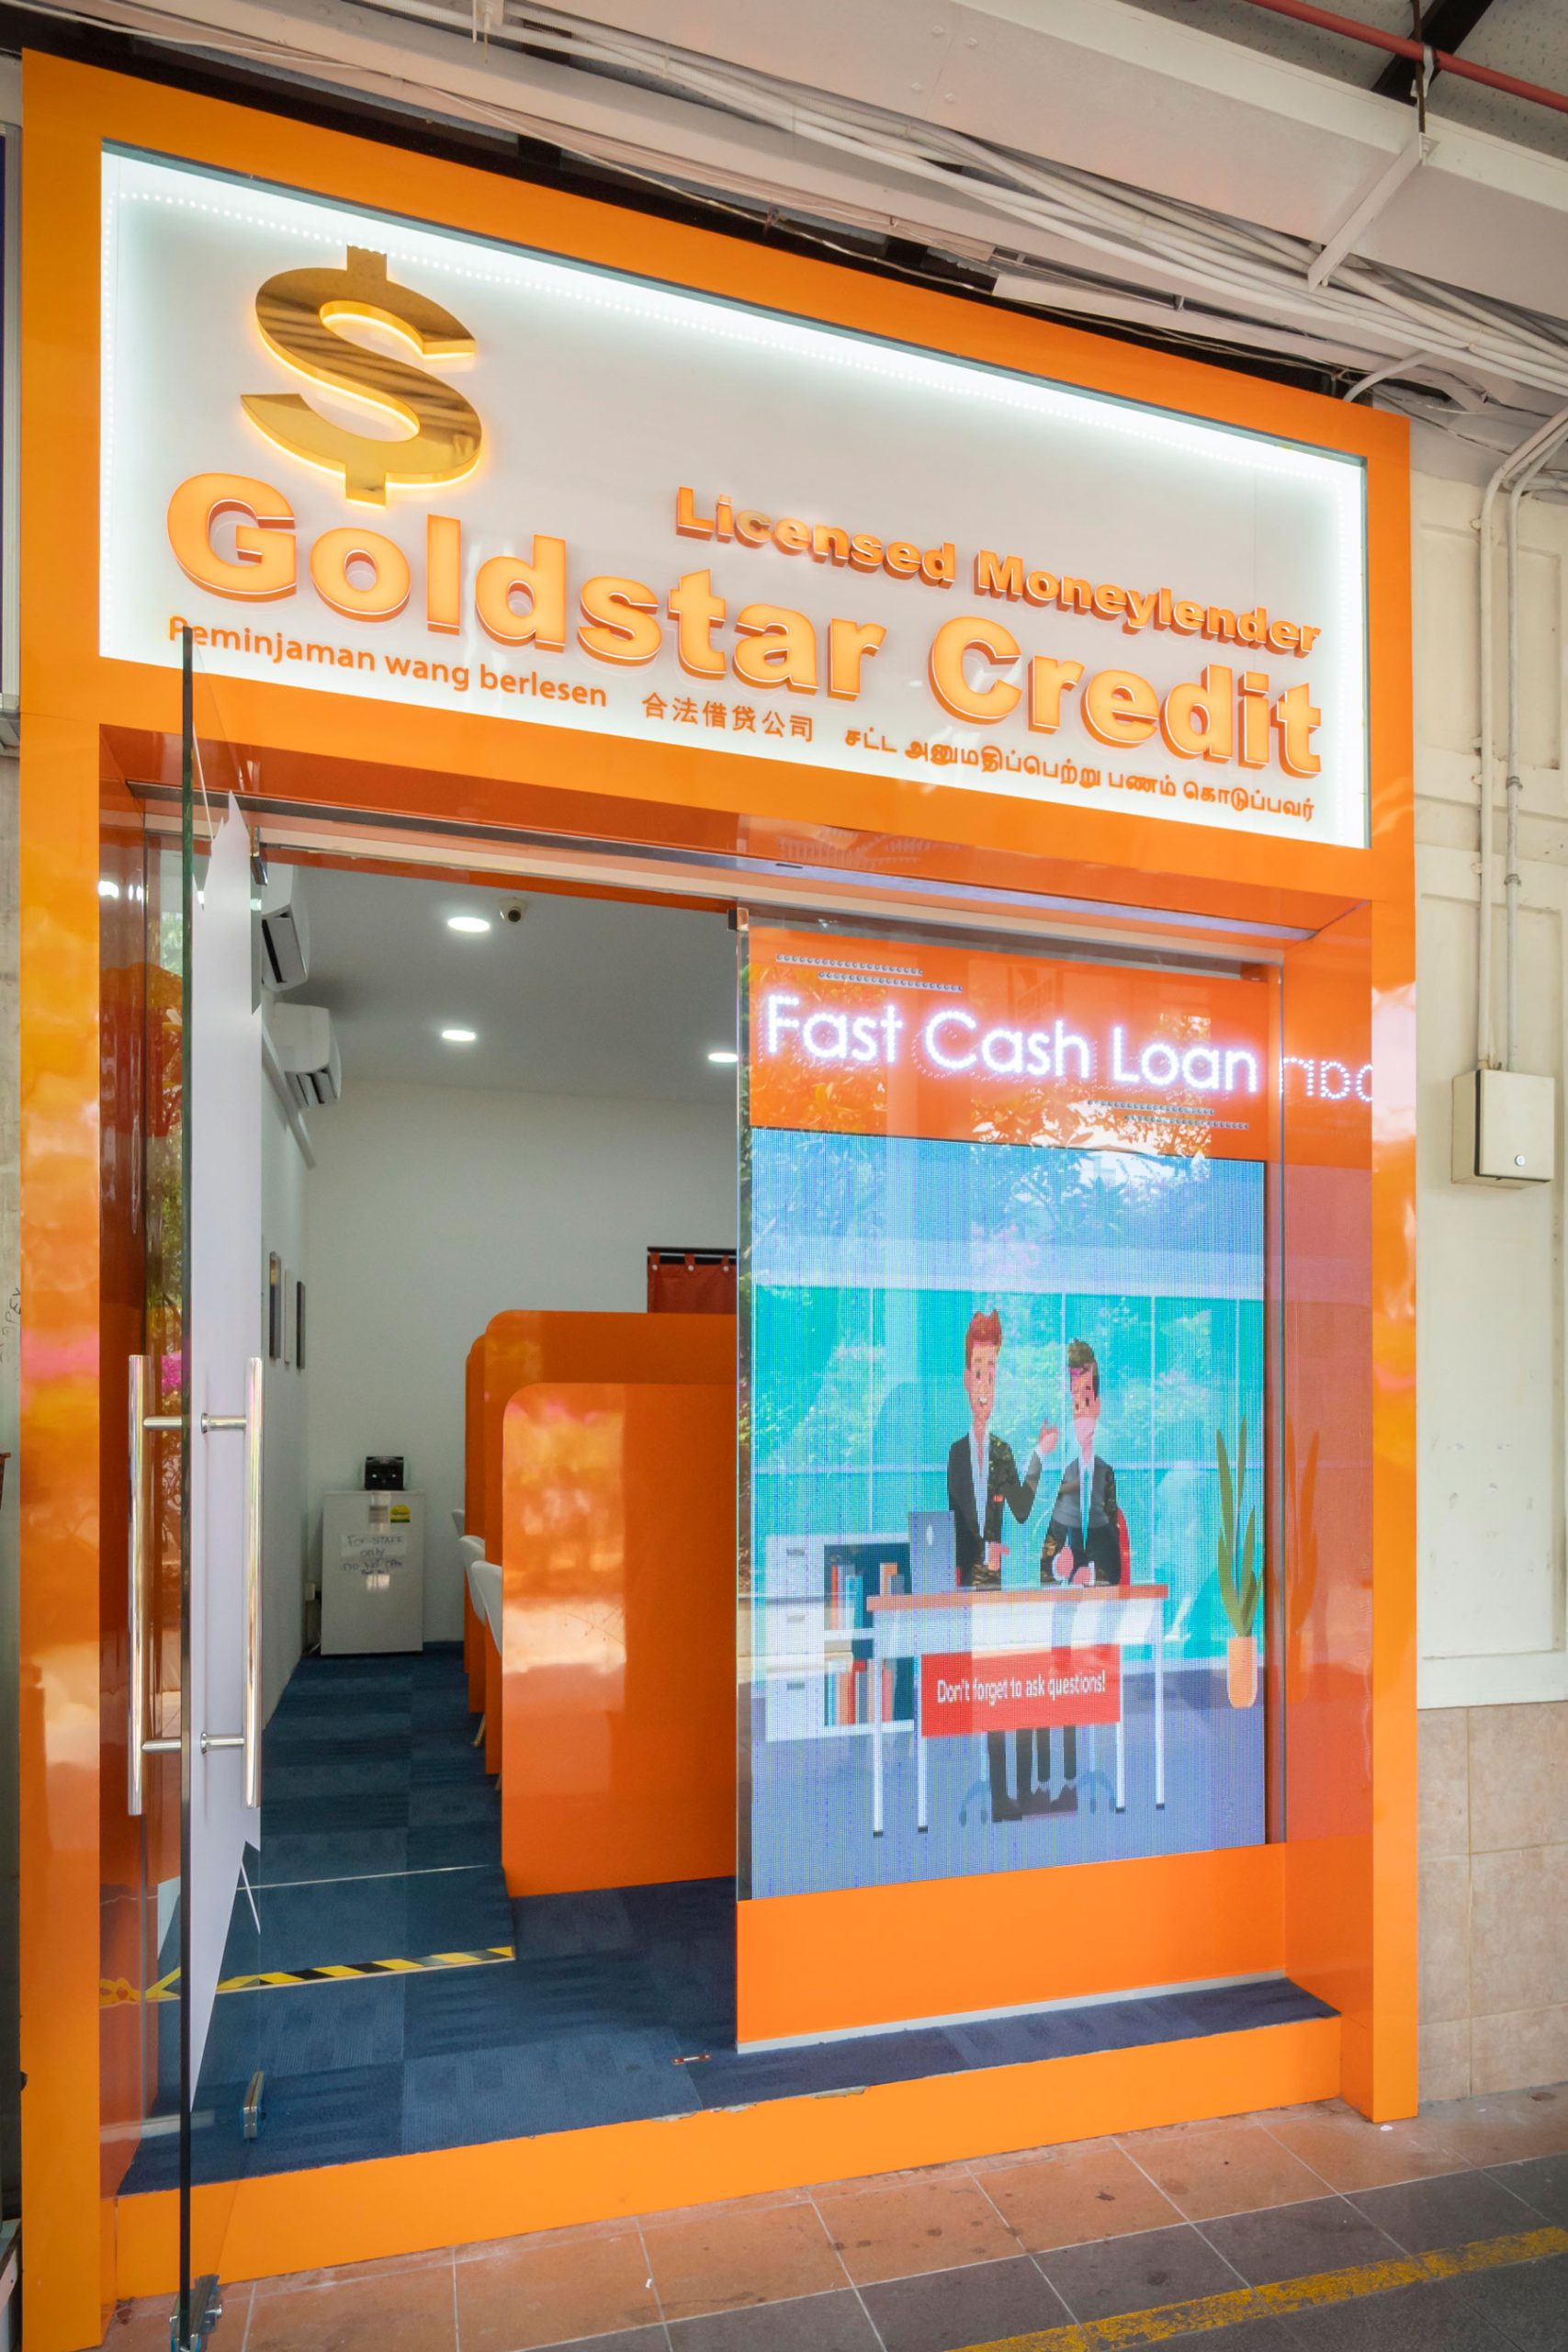 Toa payoh money lender Goldstar credit shop front